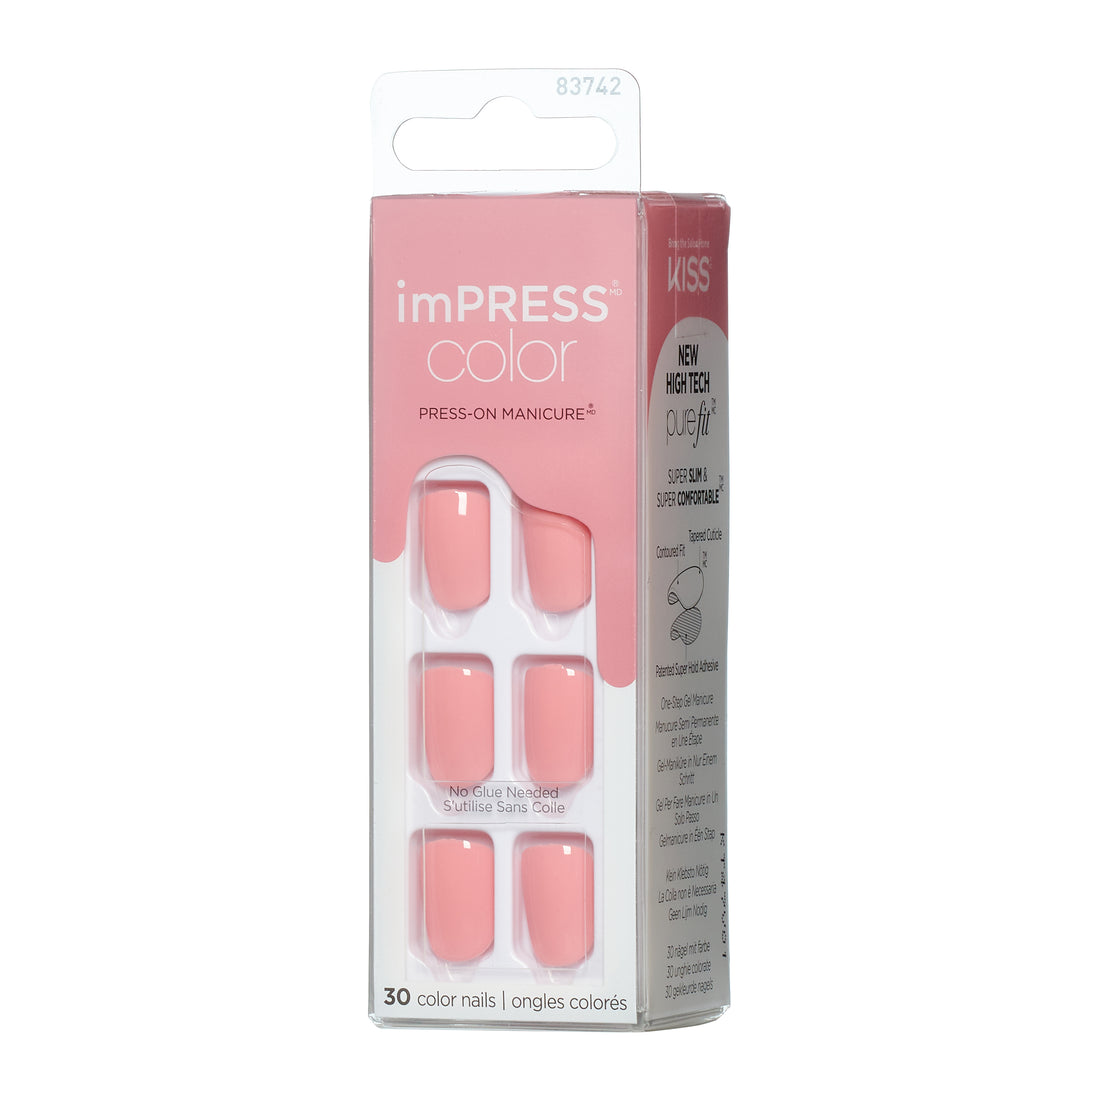 imPRESS Color Press-On Manicure - Pretty Pink